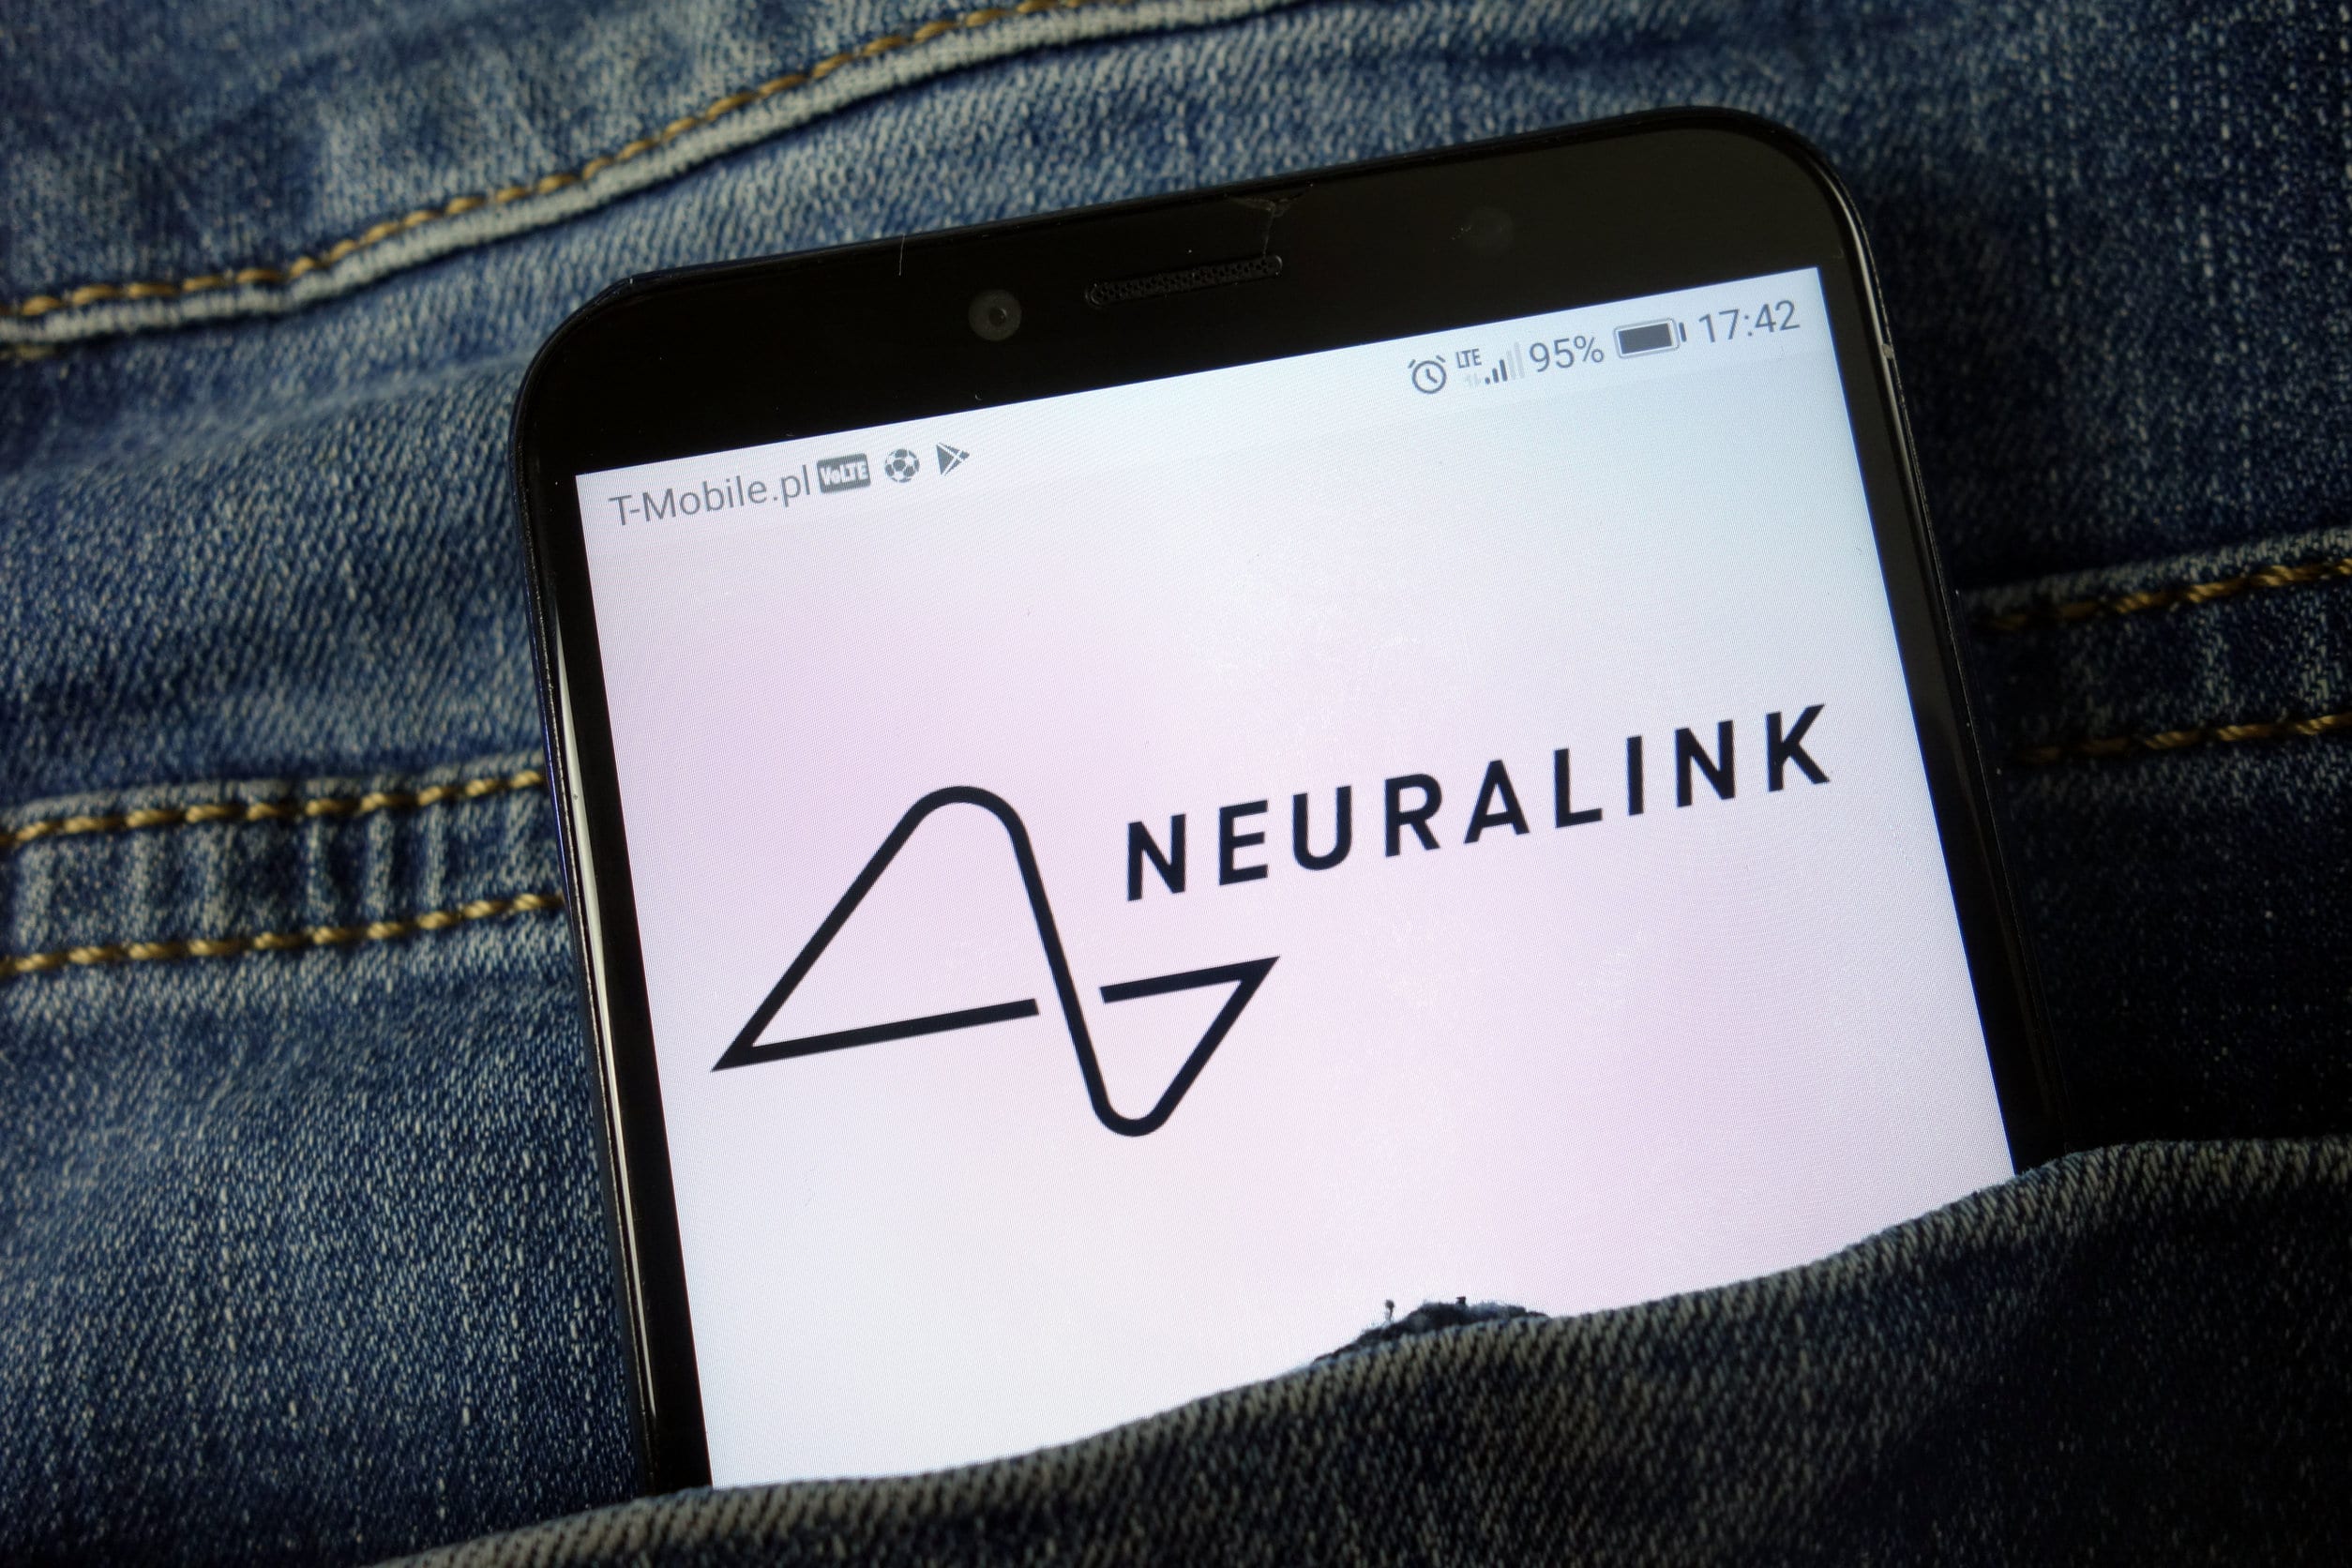 Logo Neuralink